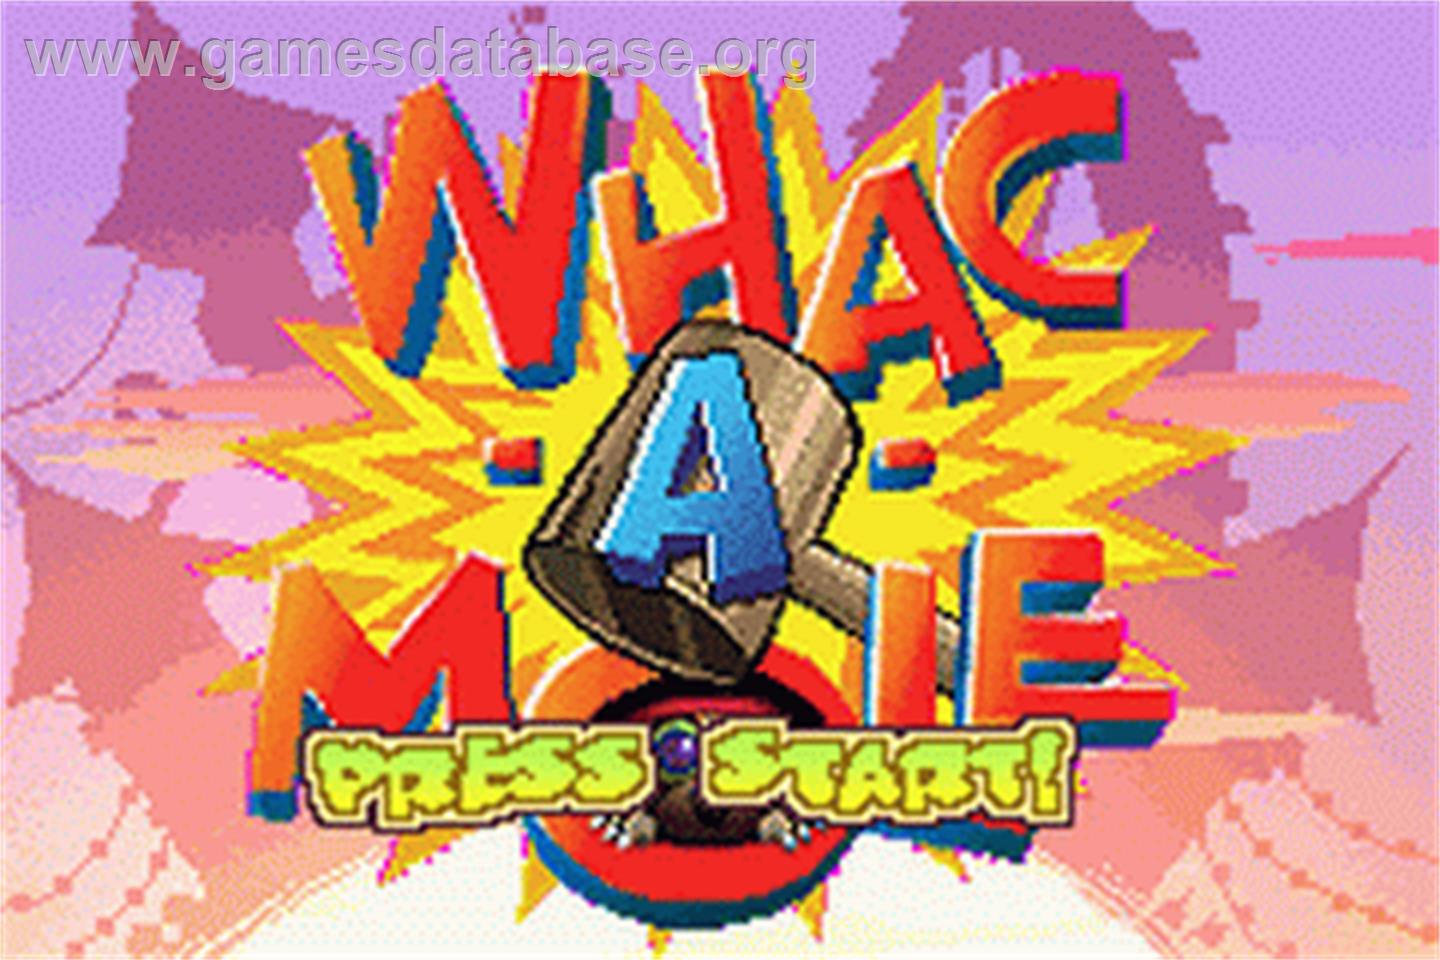 Whac-A-Mole - Nintendo Game Boy Advance - Artwork - Title Screen